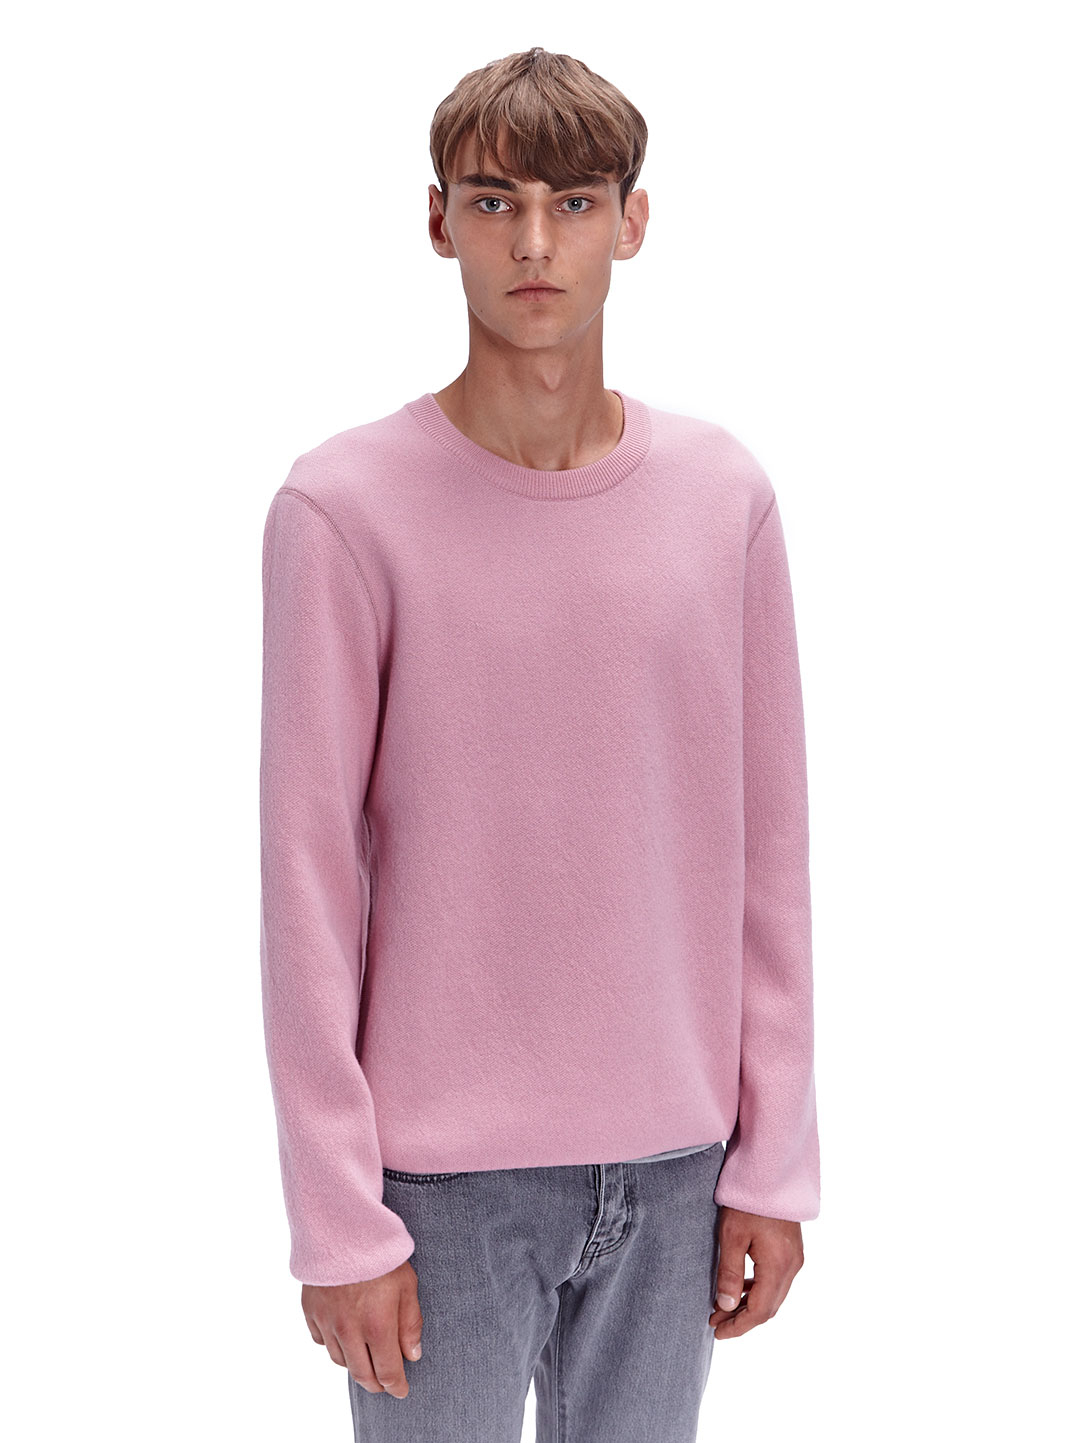 Lyst - Lanvin Mens Bicolour Crew Neck Wool Sweater in Pink for Men